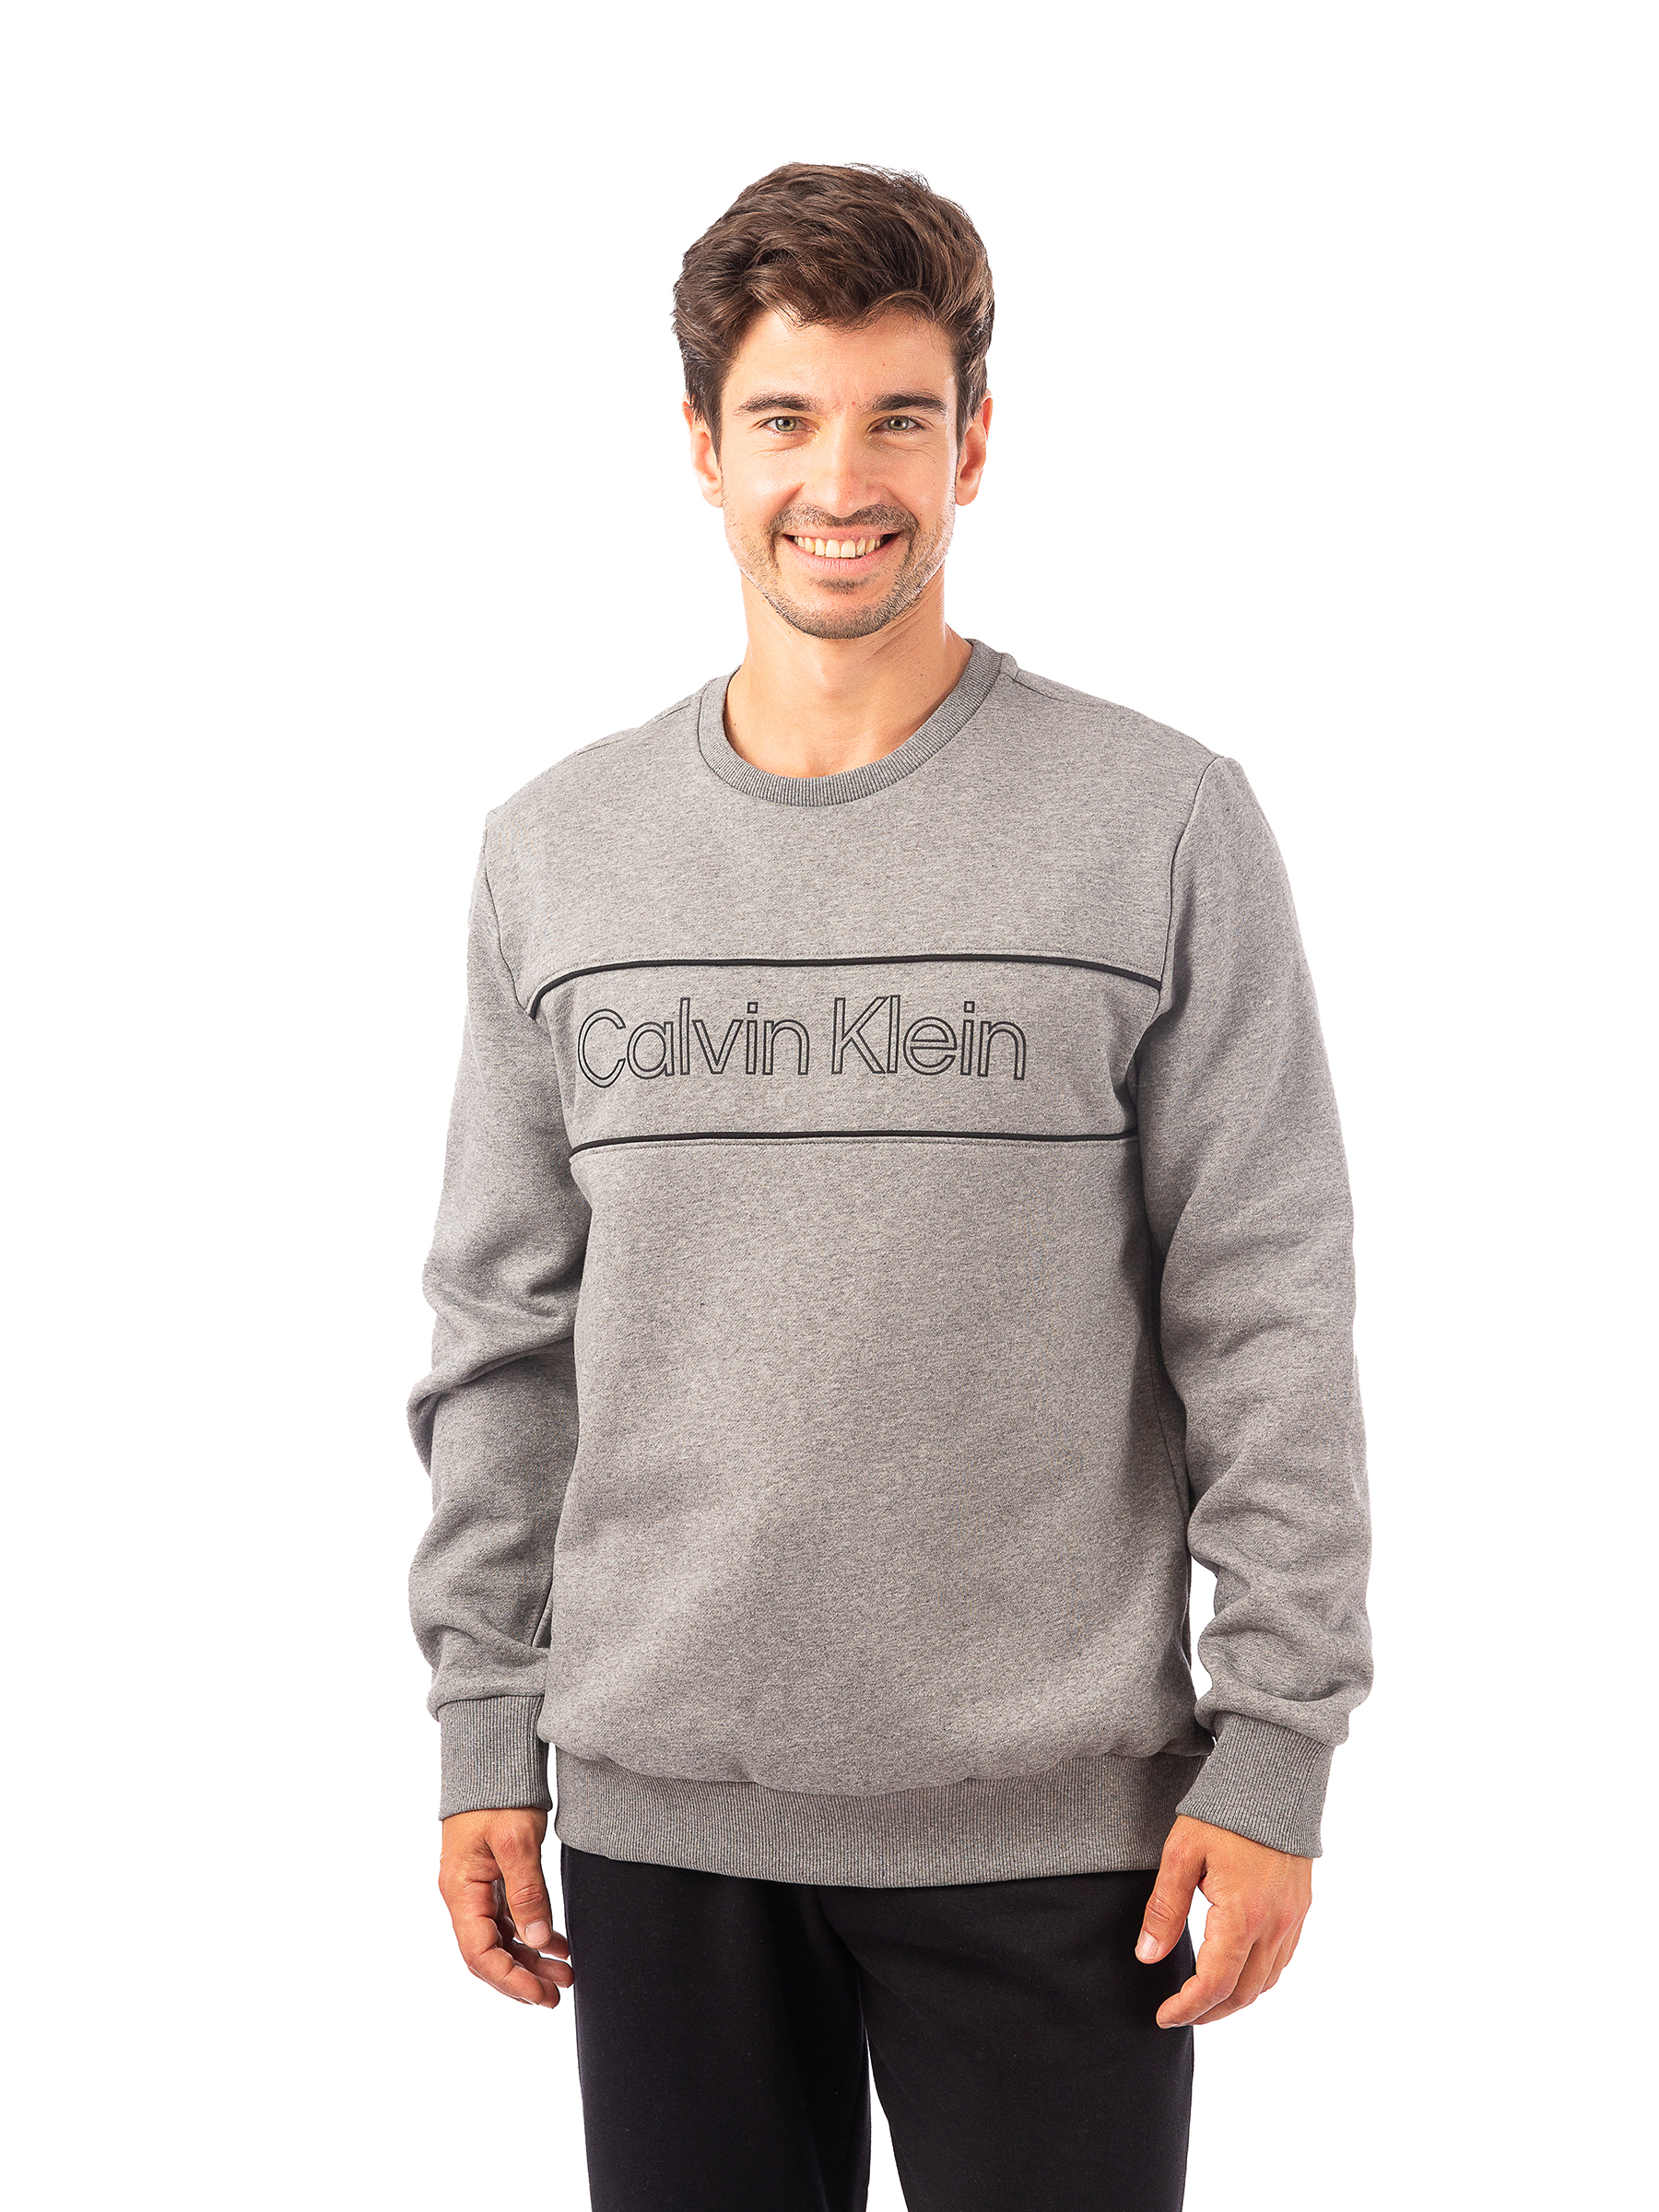 Свитшот мужской Calvin Klein 40J6242 серый 2XL